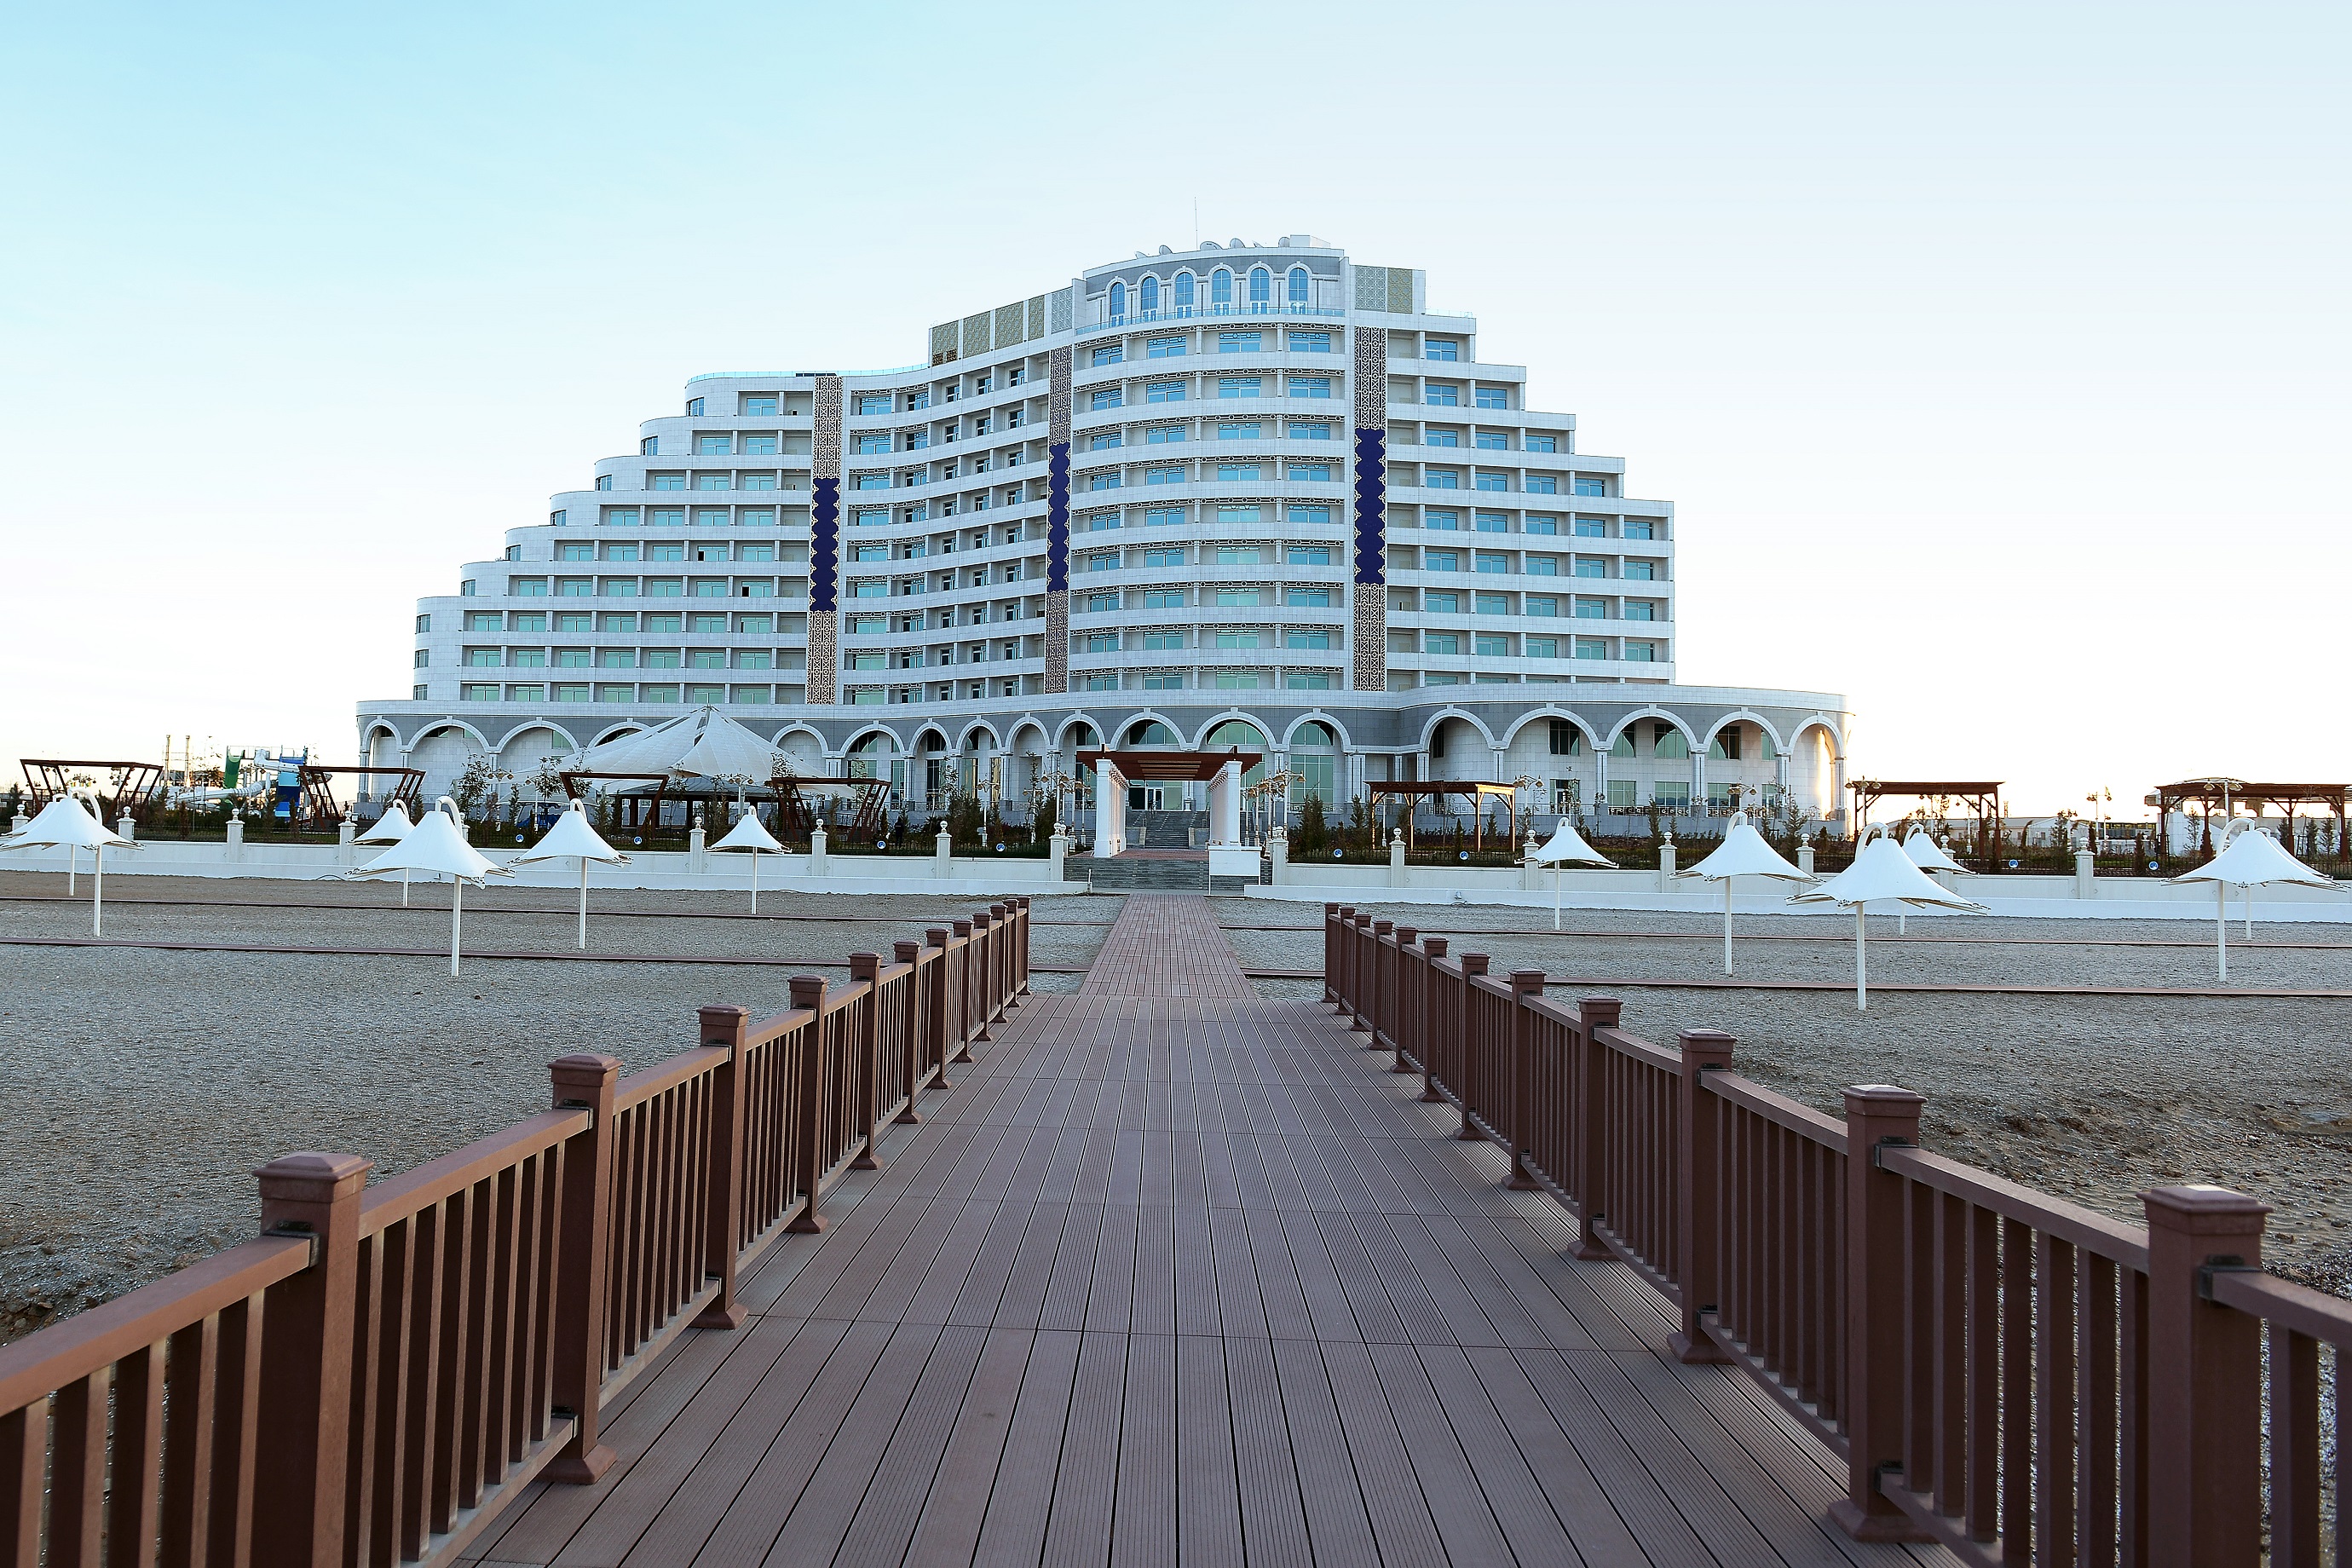  Deniz Derya Hotel